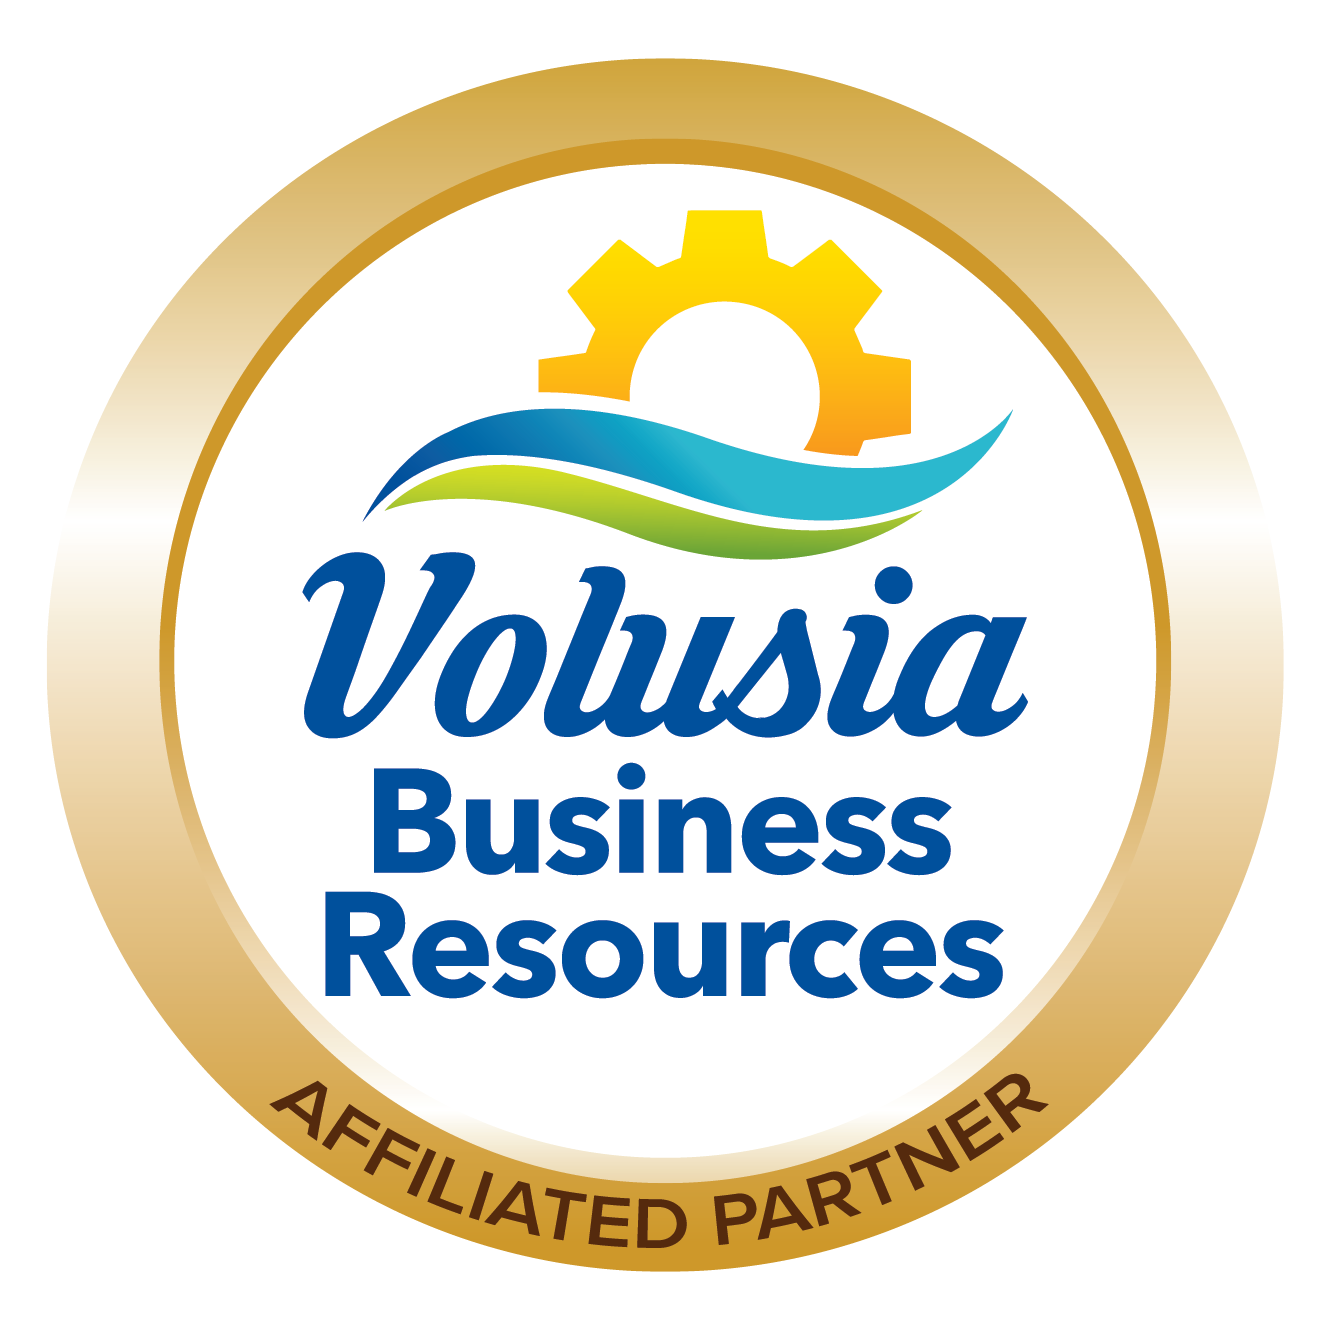 Volusia Business Resources Affiliated Partner logo. Additional details in description.